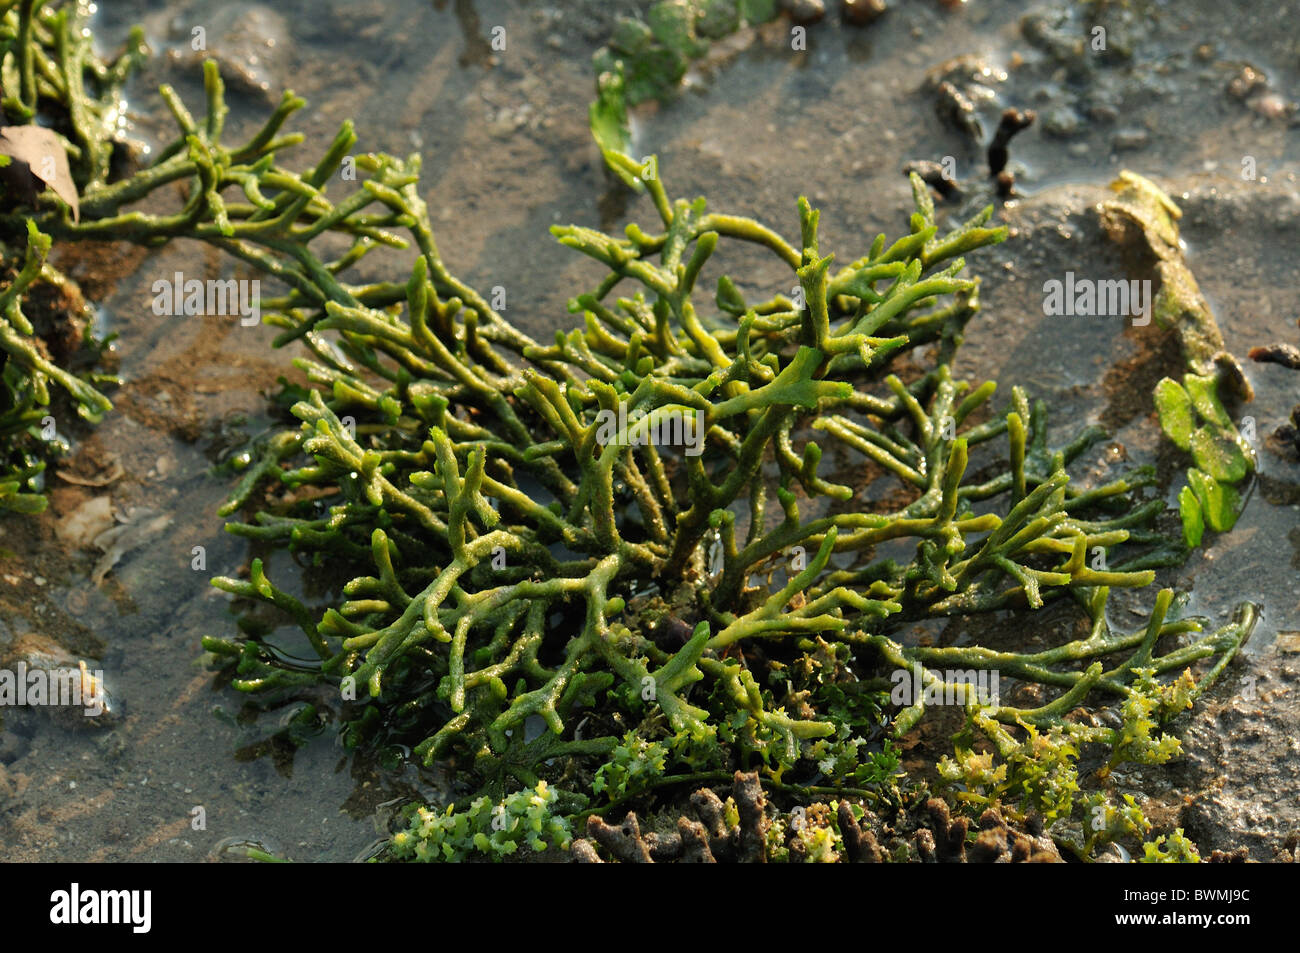 Holey spugna Ceratodictyon alghe spongiosum, Lomentariaceae, alghe mangrovie spiaggia della Baia di Munjangan, Bali, Indonesia, Asia Foto Stock